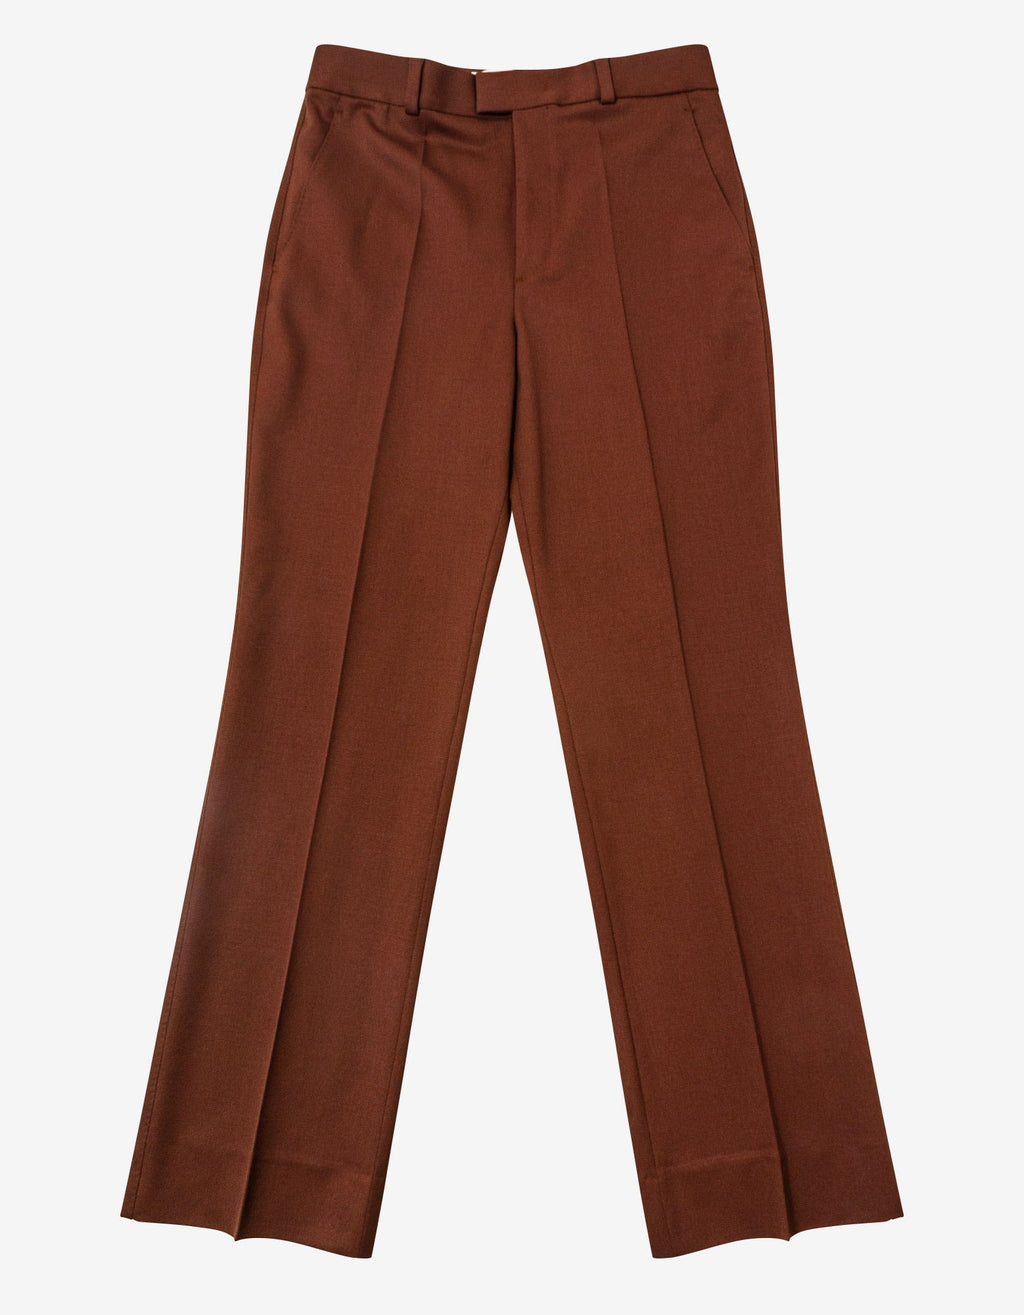 Valentino Valentino Brown Wool Trousers